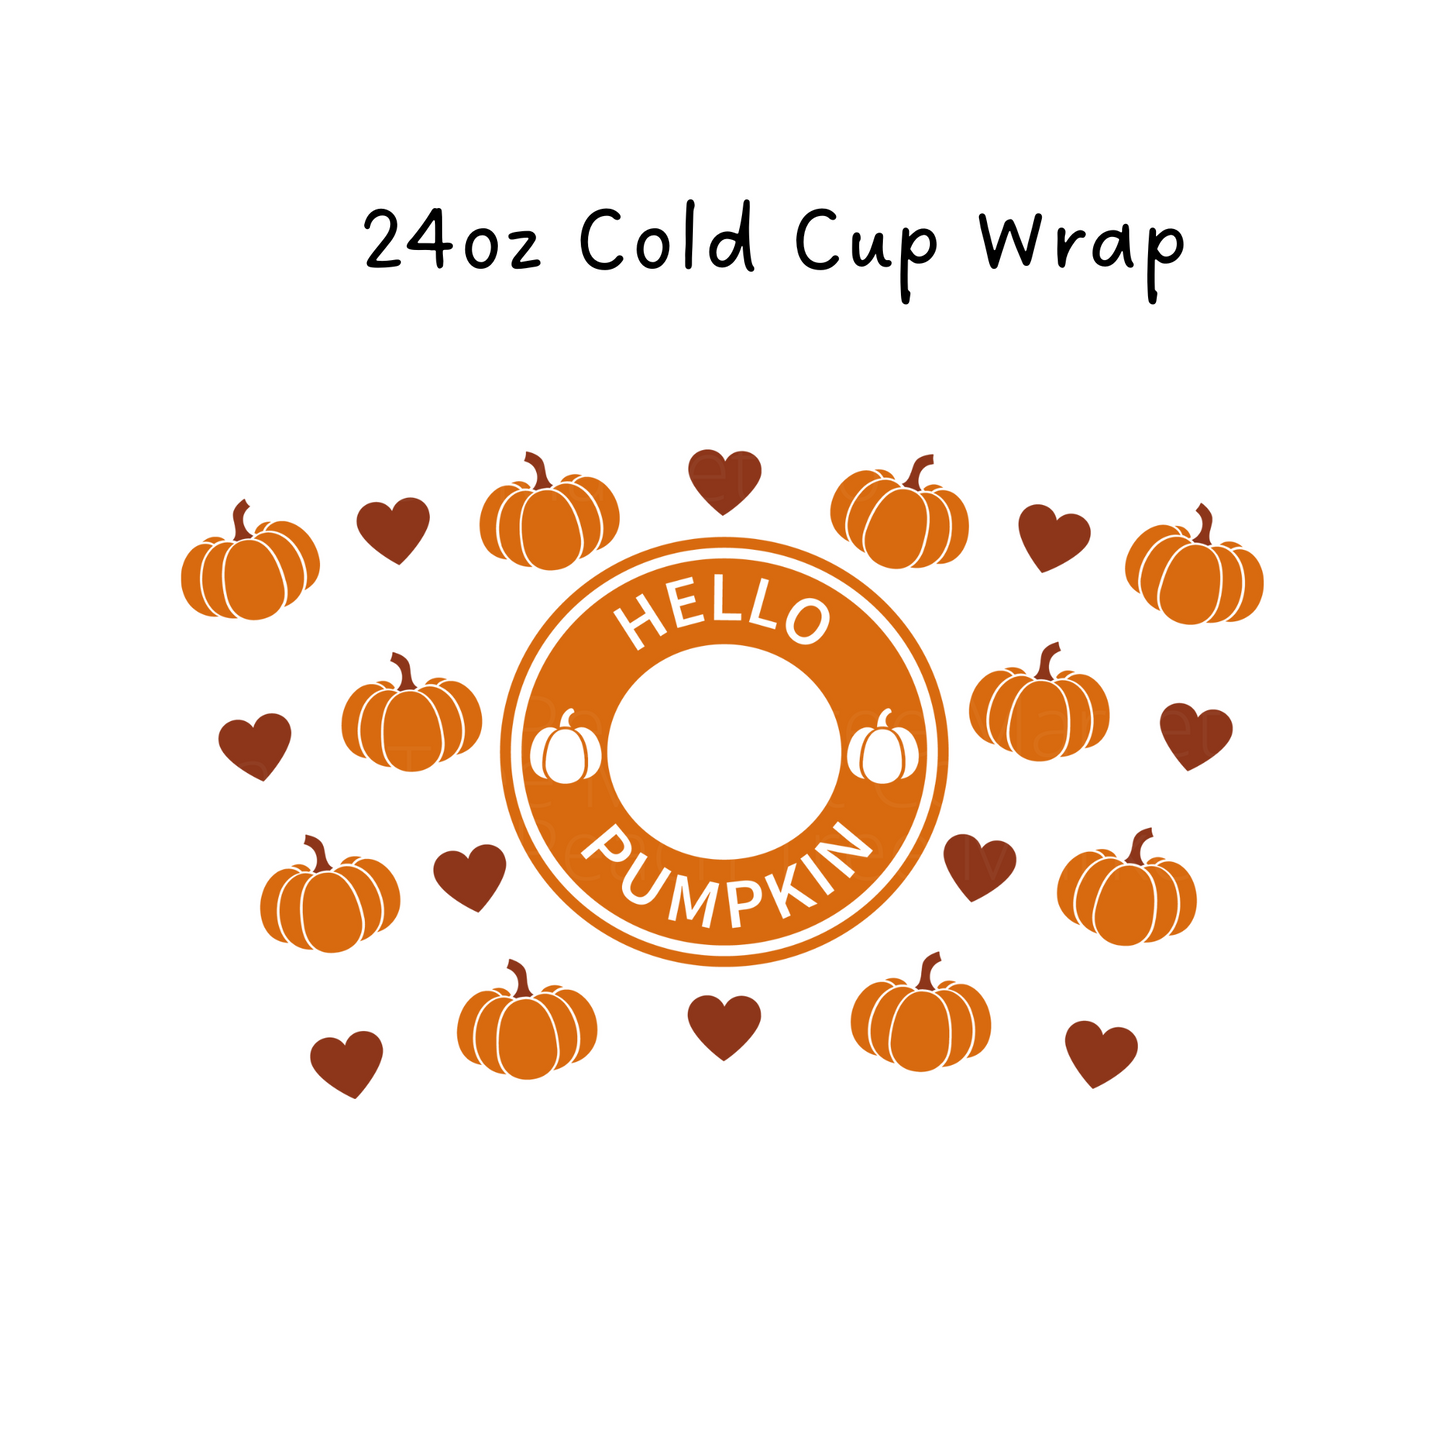 Hello Pumpkin 24 OZ Cold Cup Wrap